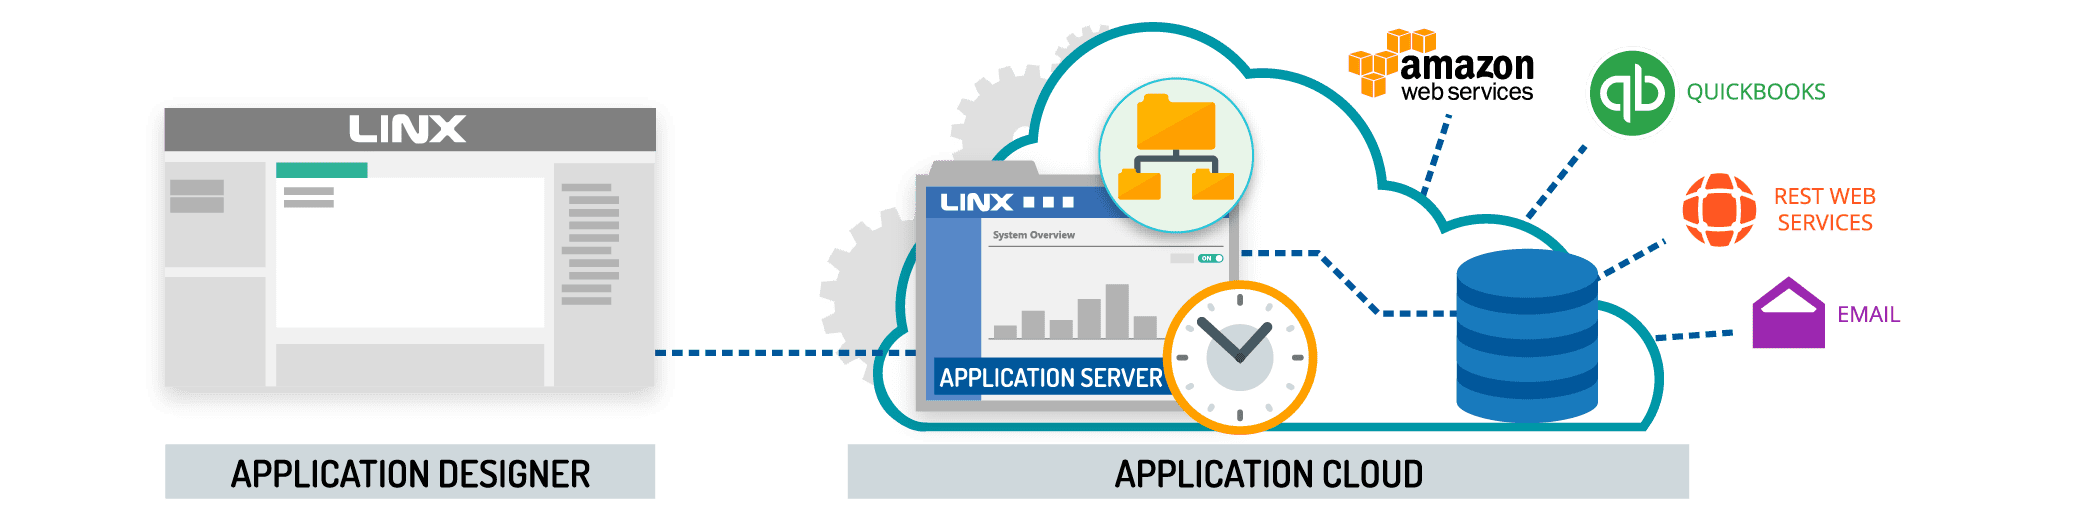 Linx Application Server Illistration